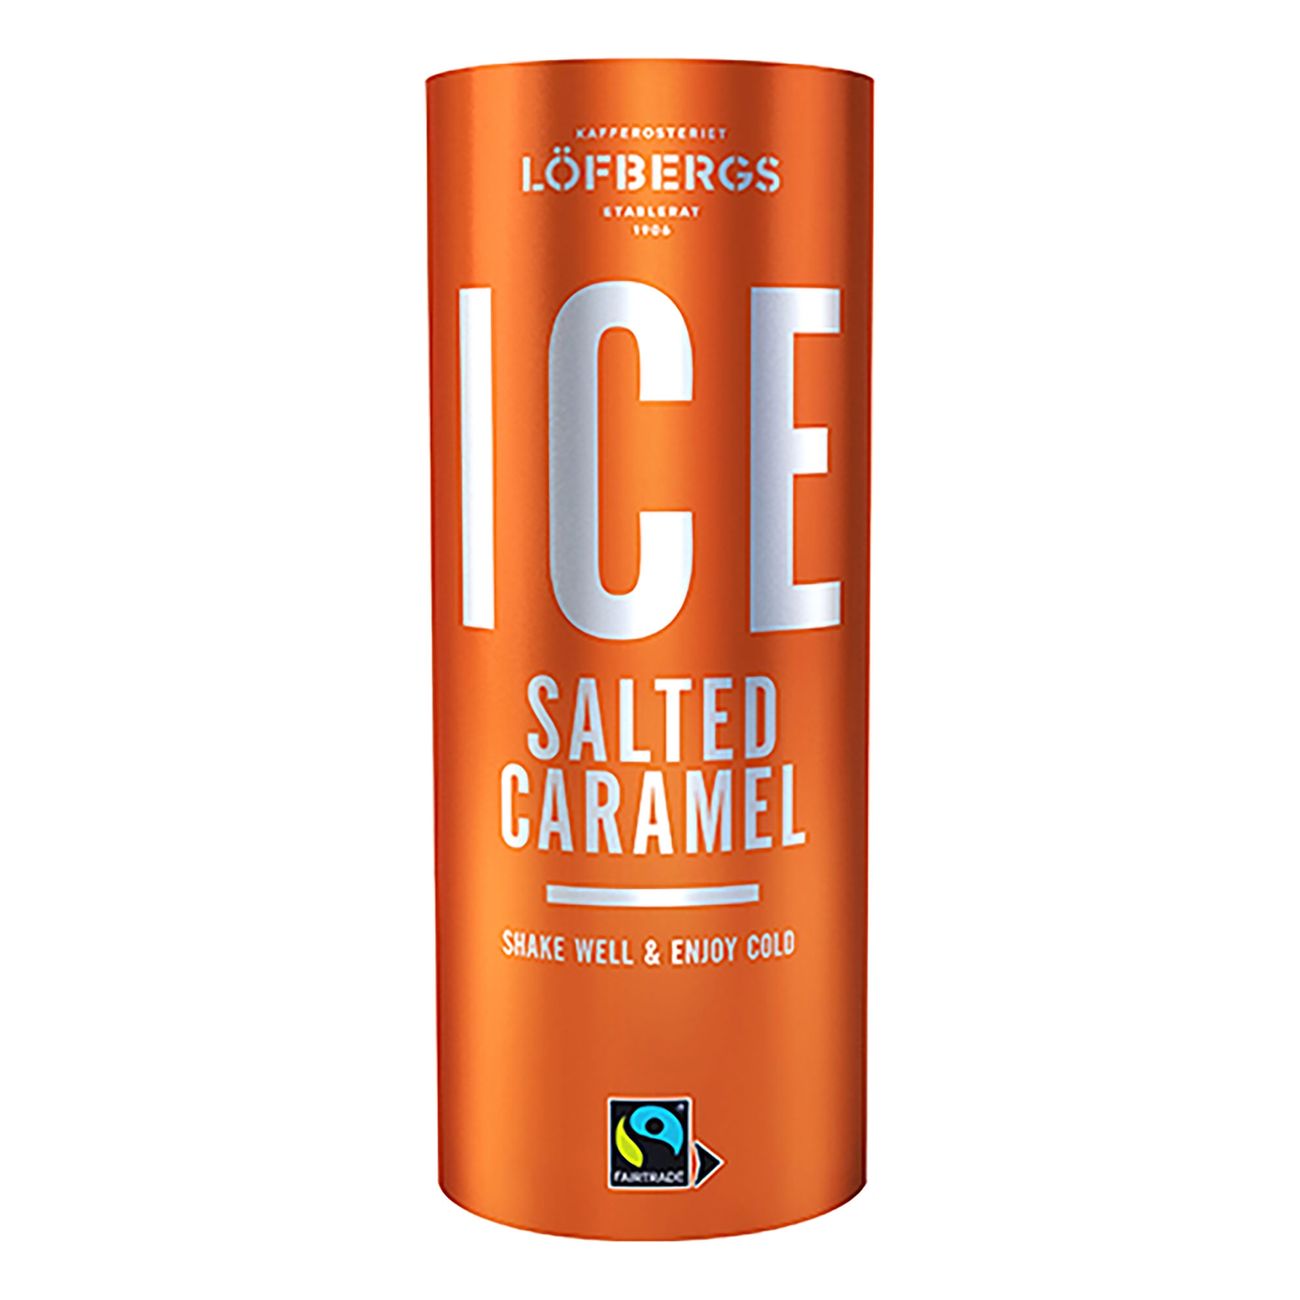 ice-salted-caramel-230ml-86257-1